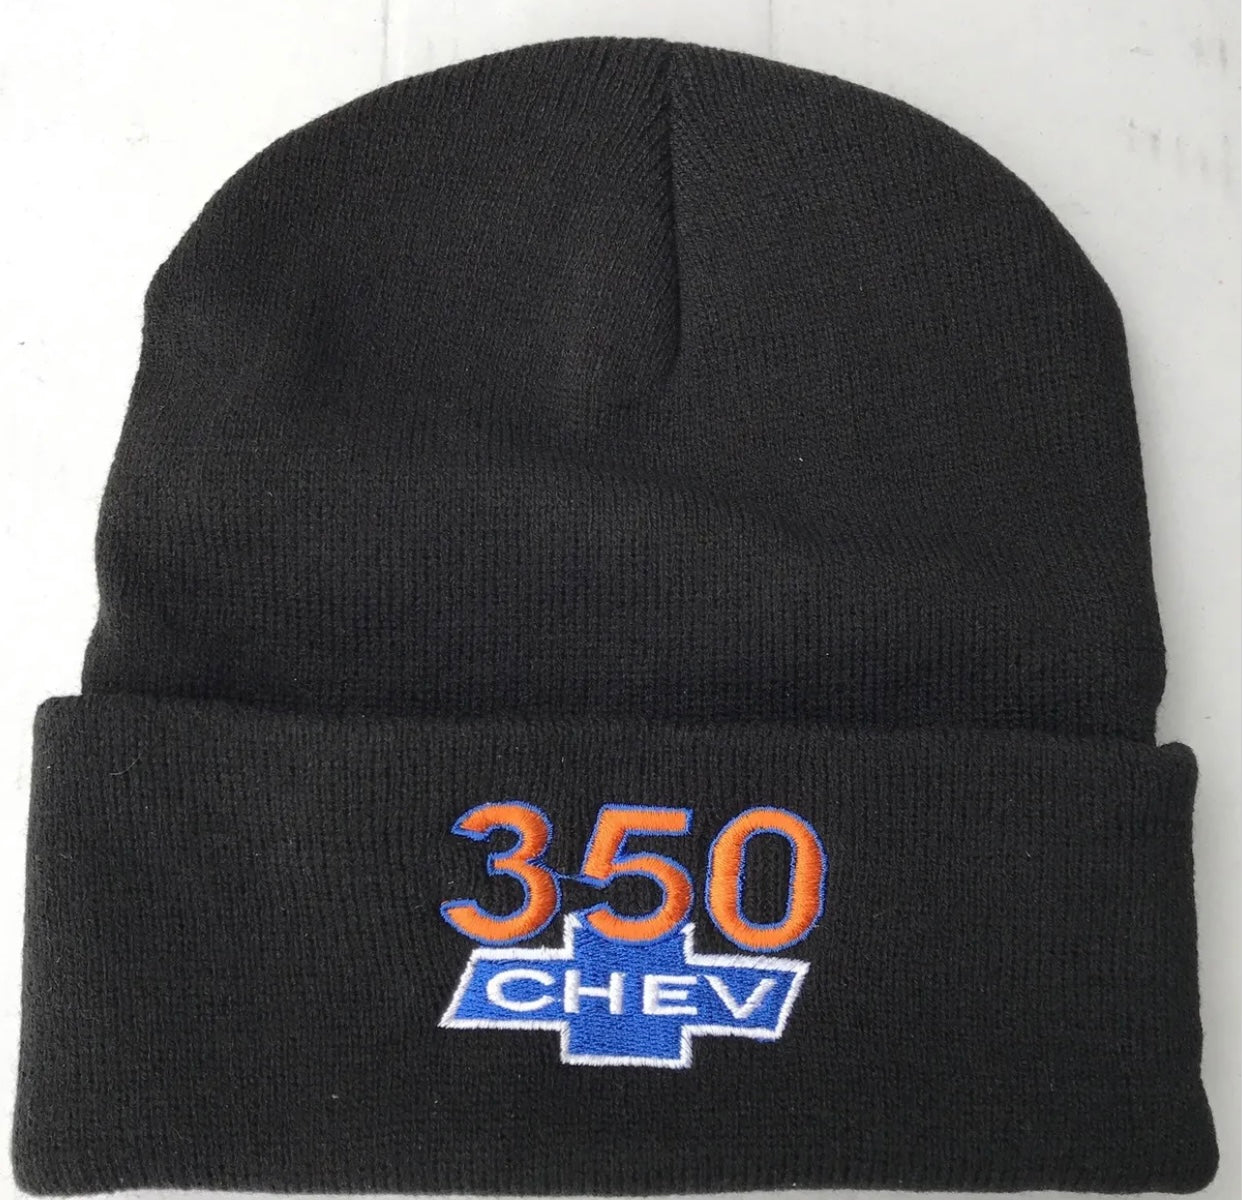 350 Chev Embroidered Beanie Chevrolet